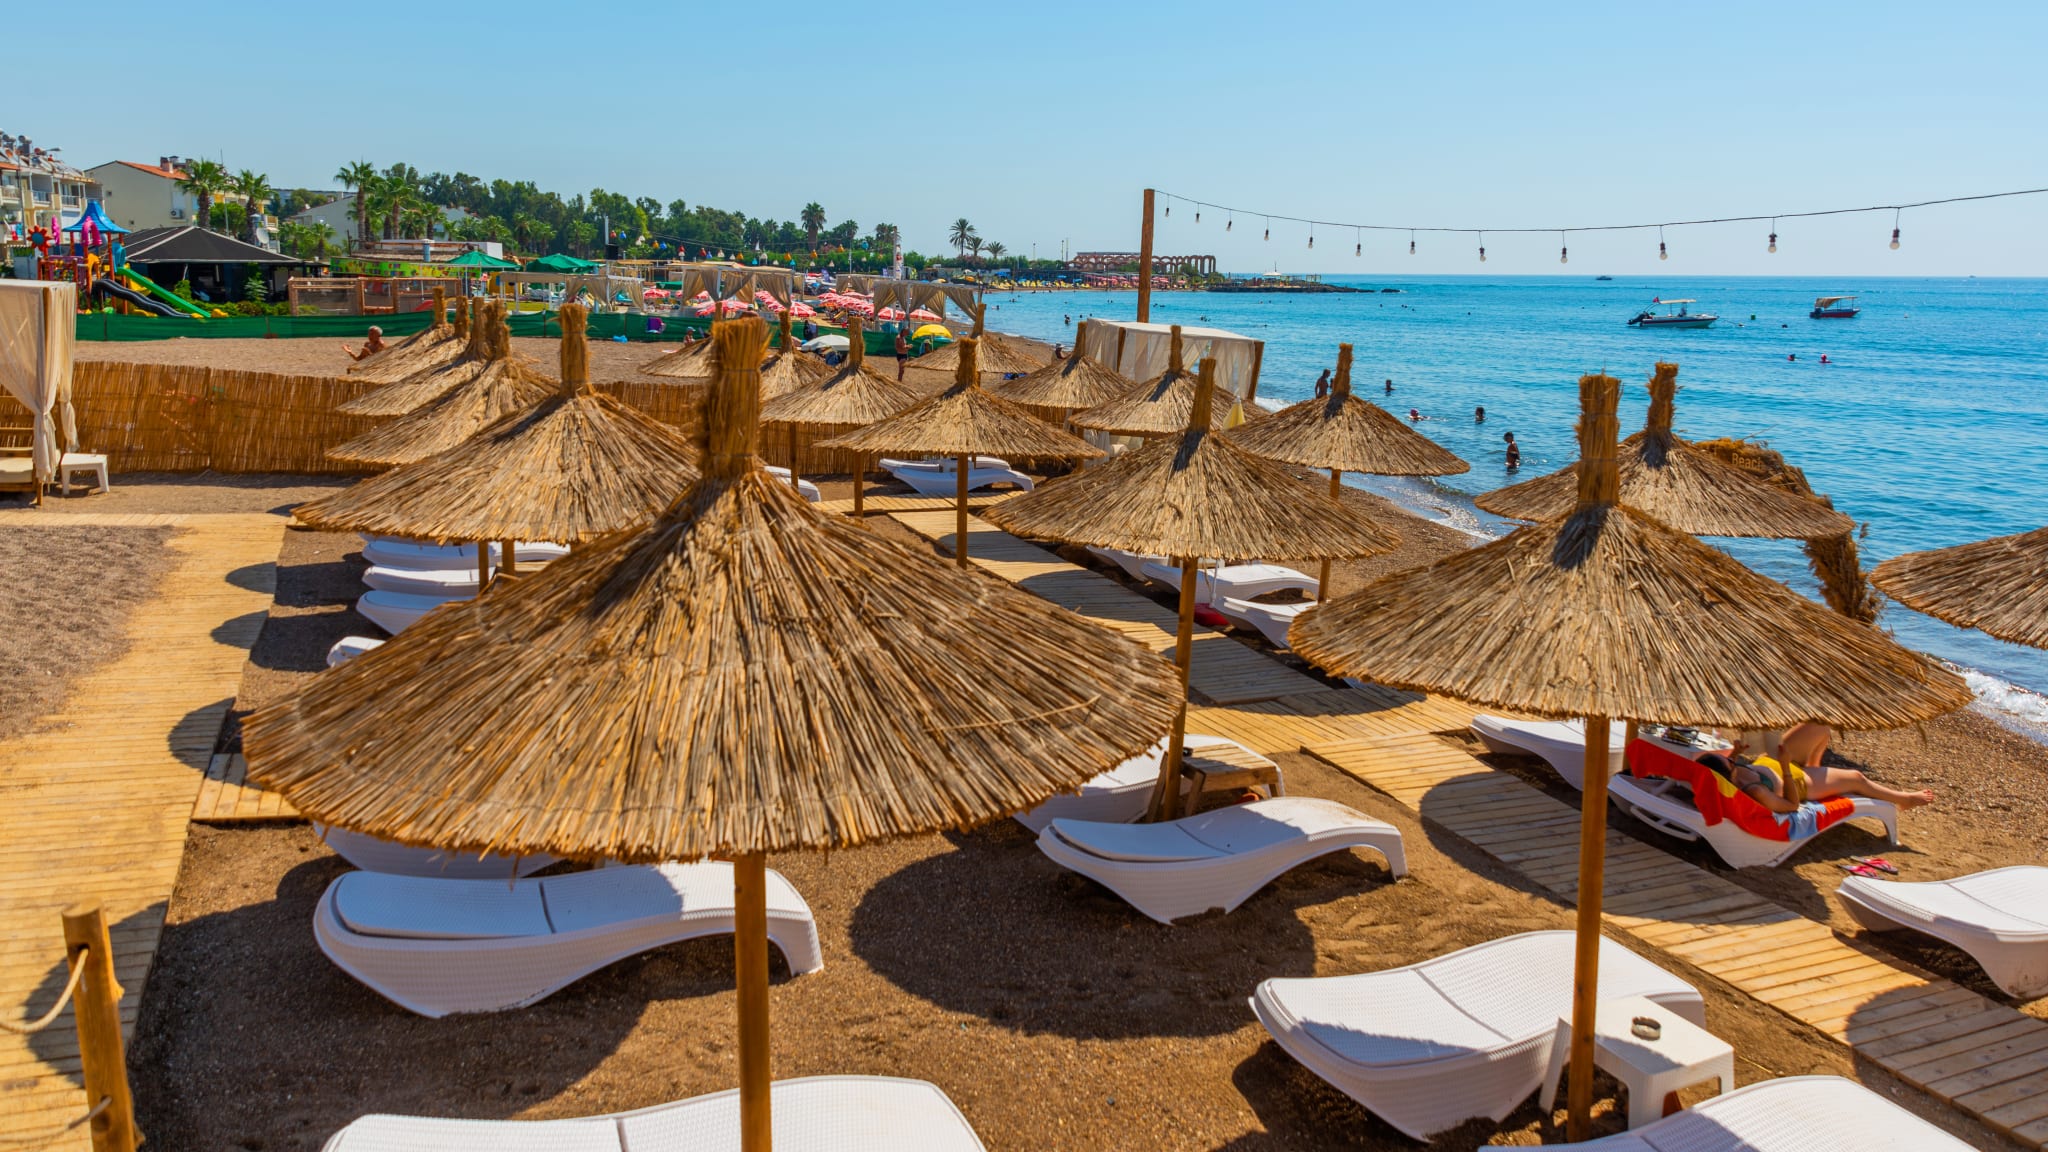 Lara Beach, Antalya @ Anna ART - stock.adobe.com